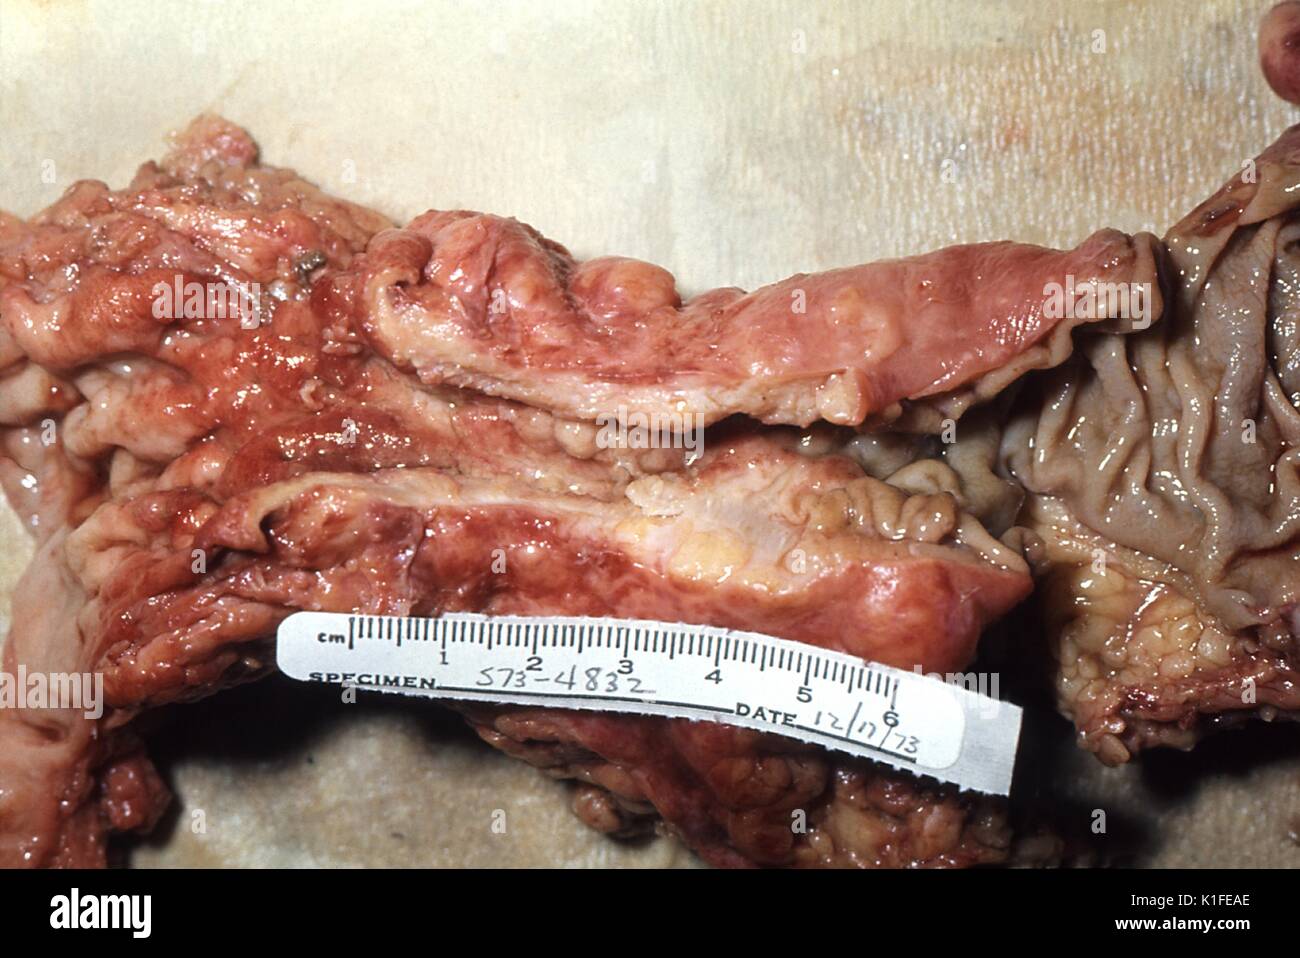 gross pathology of adenocarcinoma colon napkin ring configuration K1FEAE